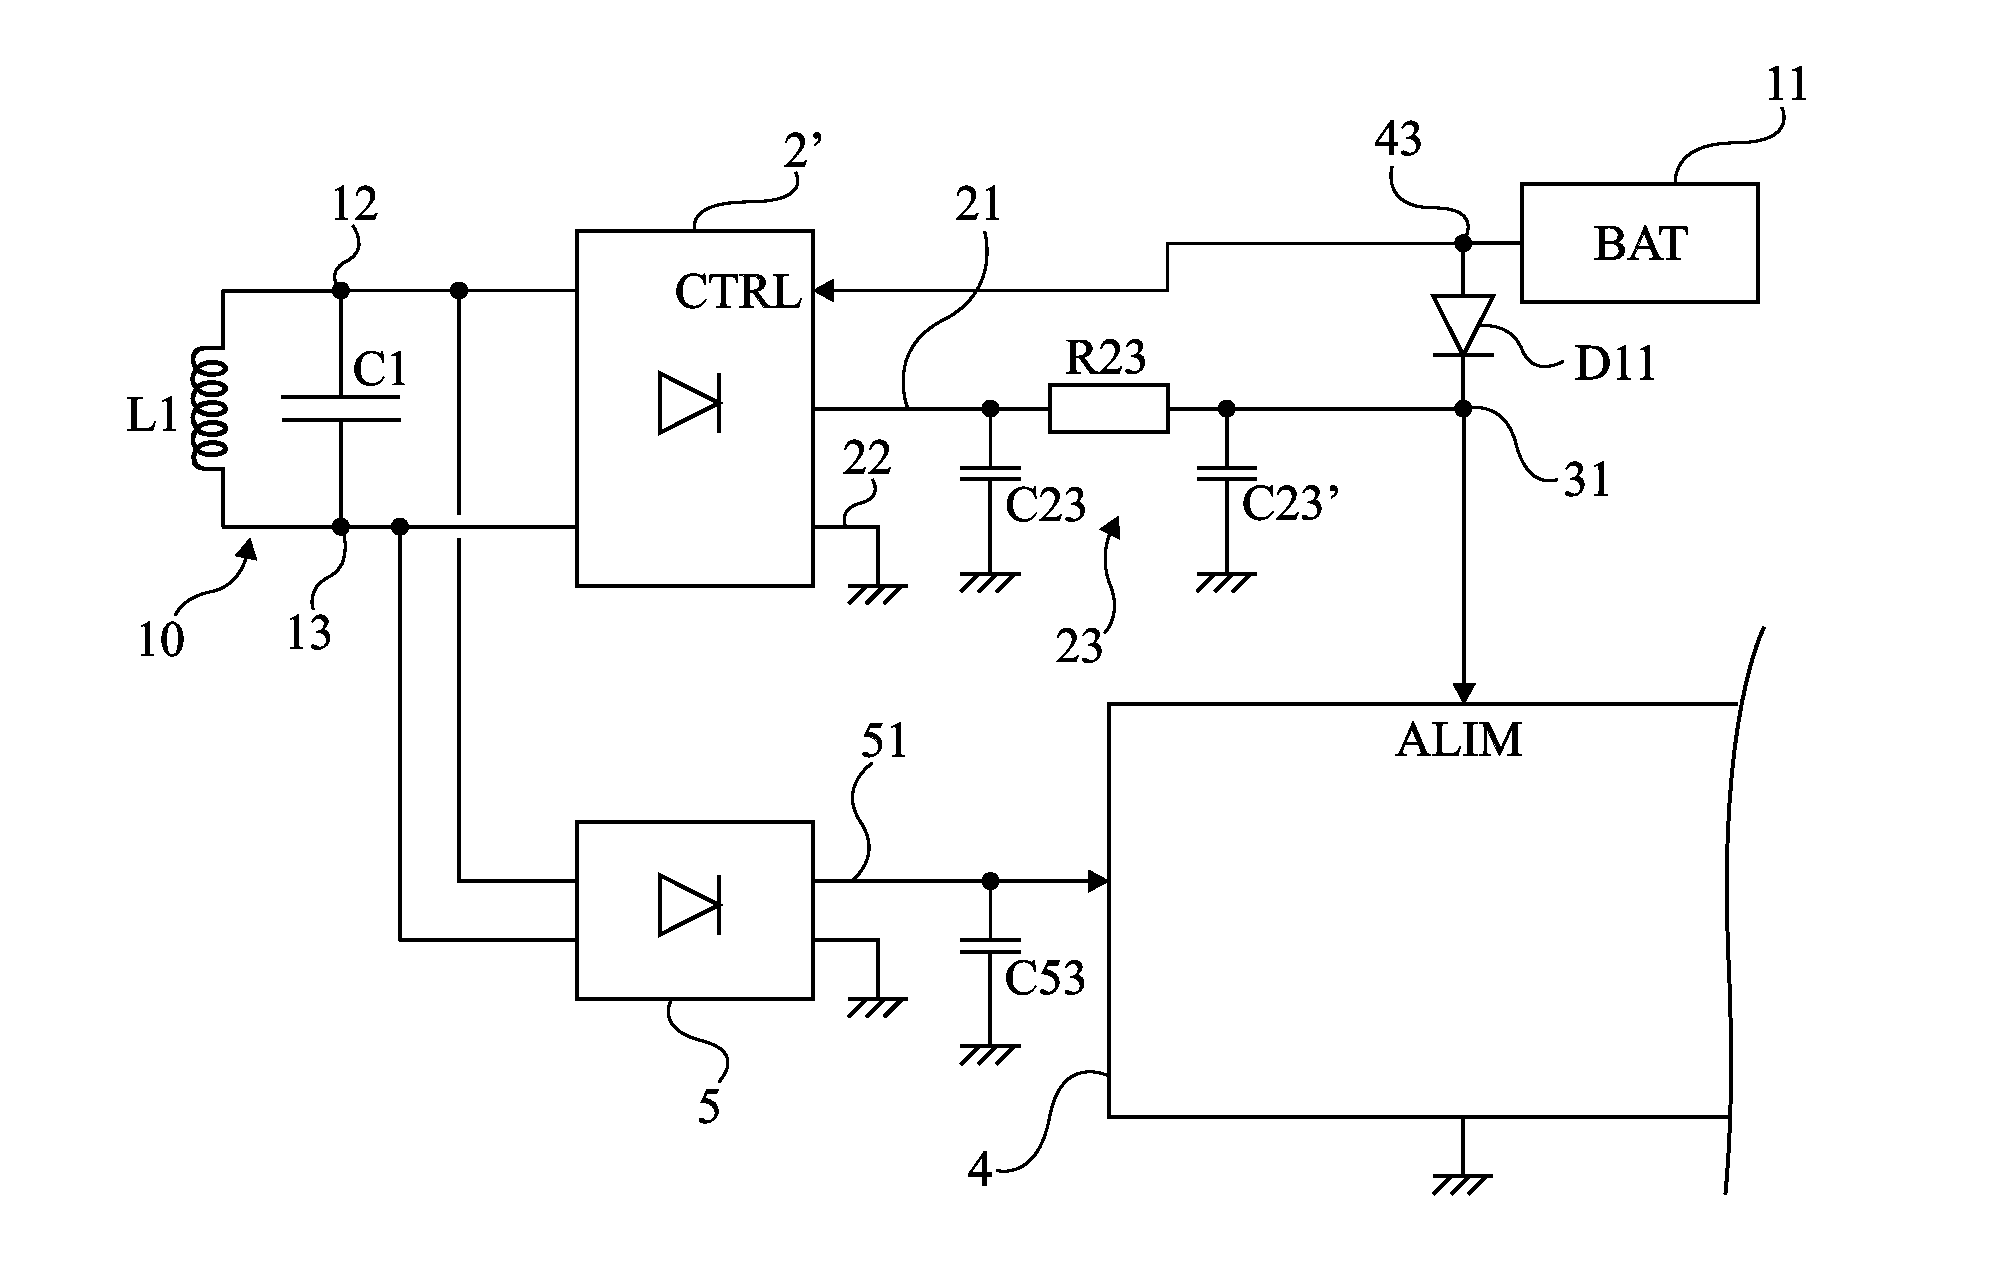 Power management in an electromagnetic transponder